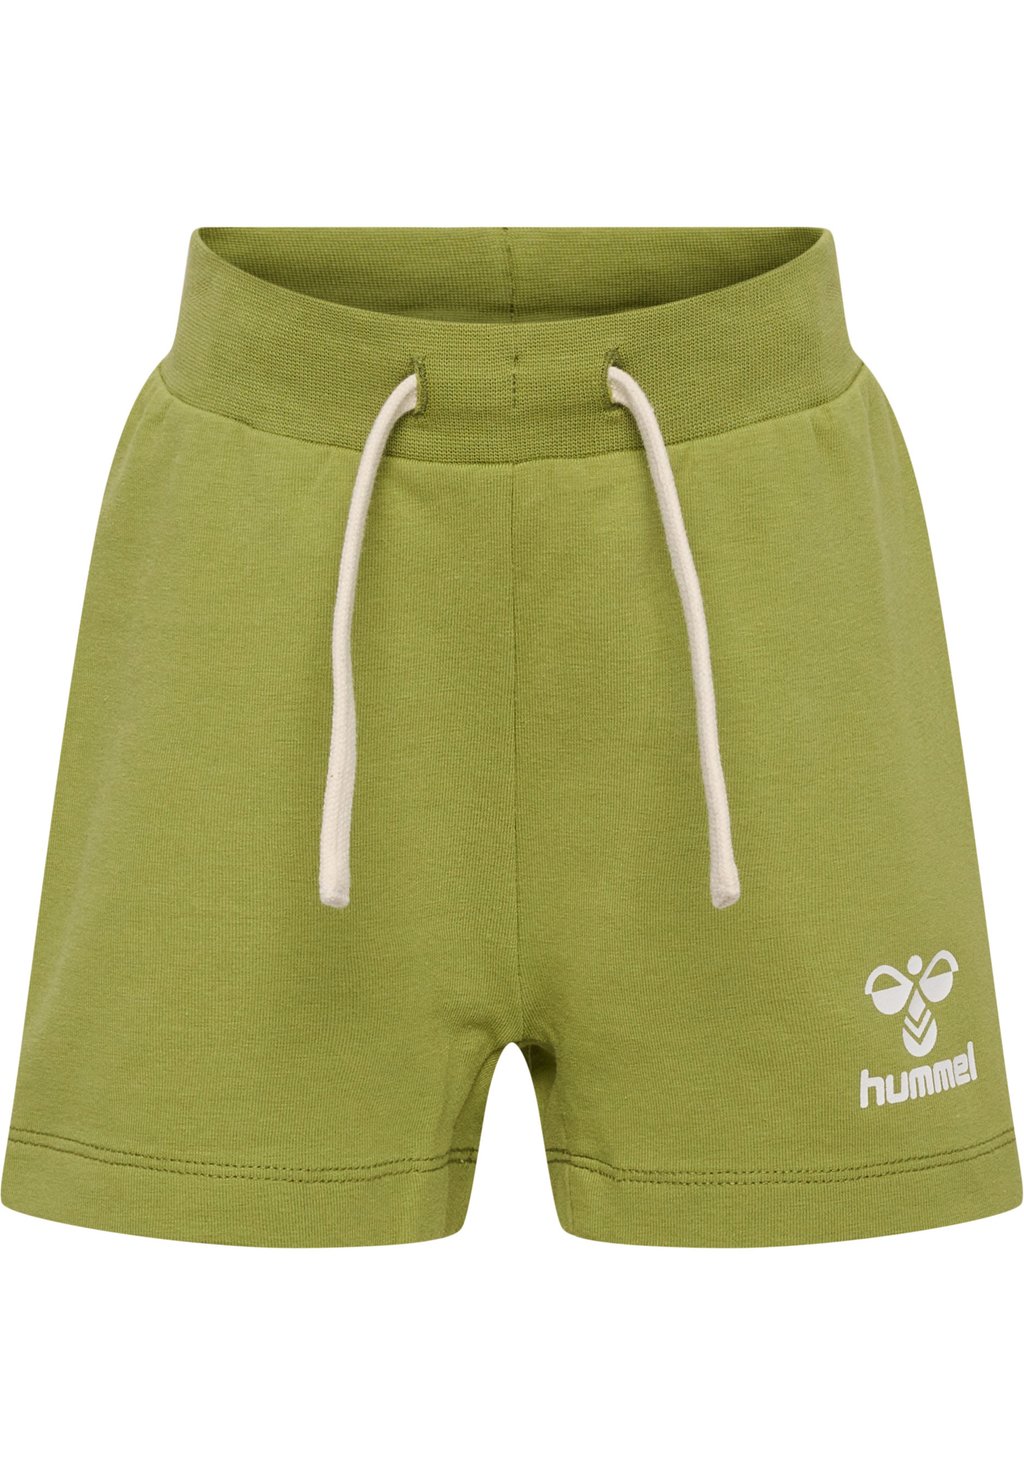 короткие спортивные брюки mejse hummel цвет chinois green Короткие спортивные брюки HMLDREAM Hummel, цвет green olive